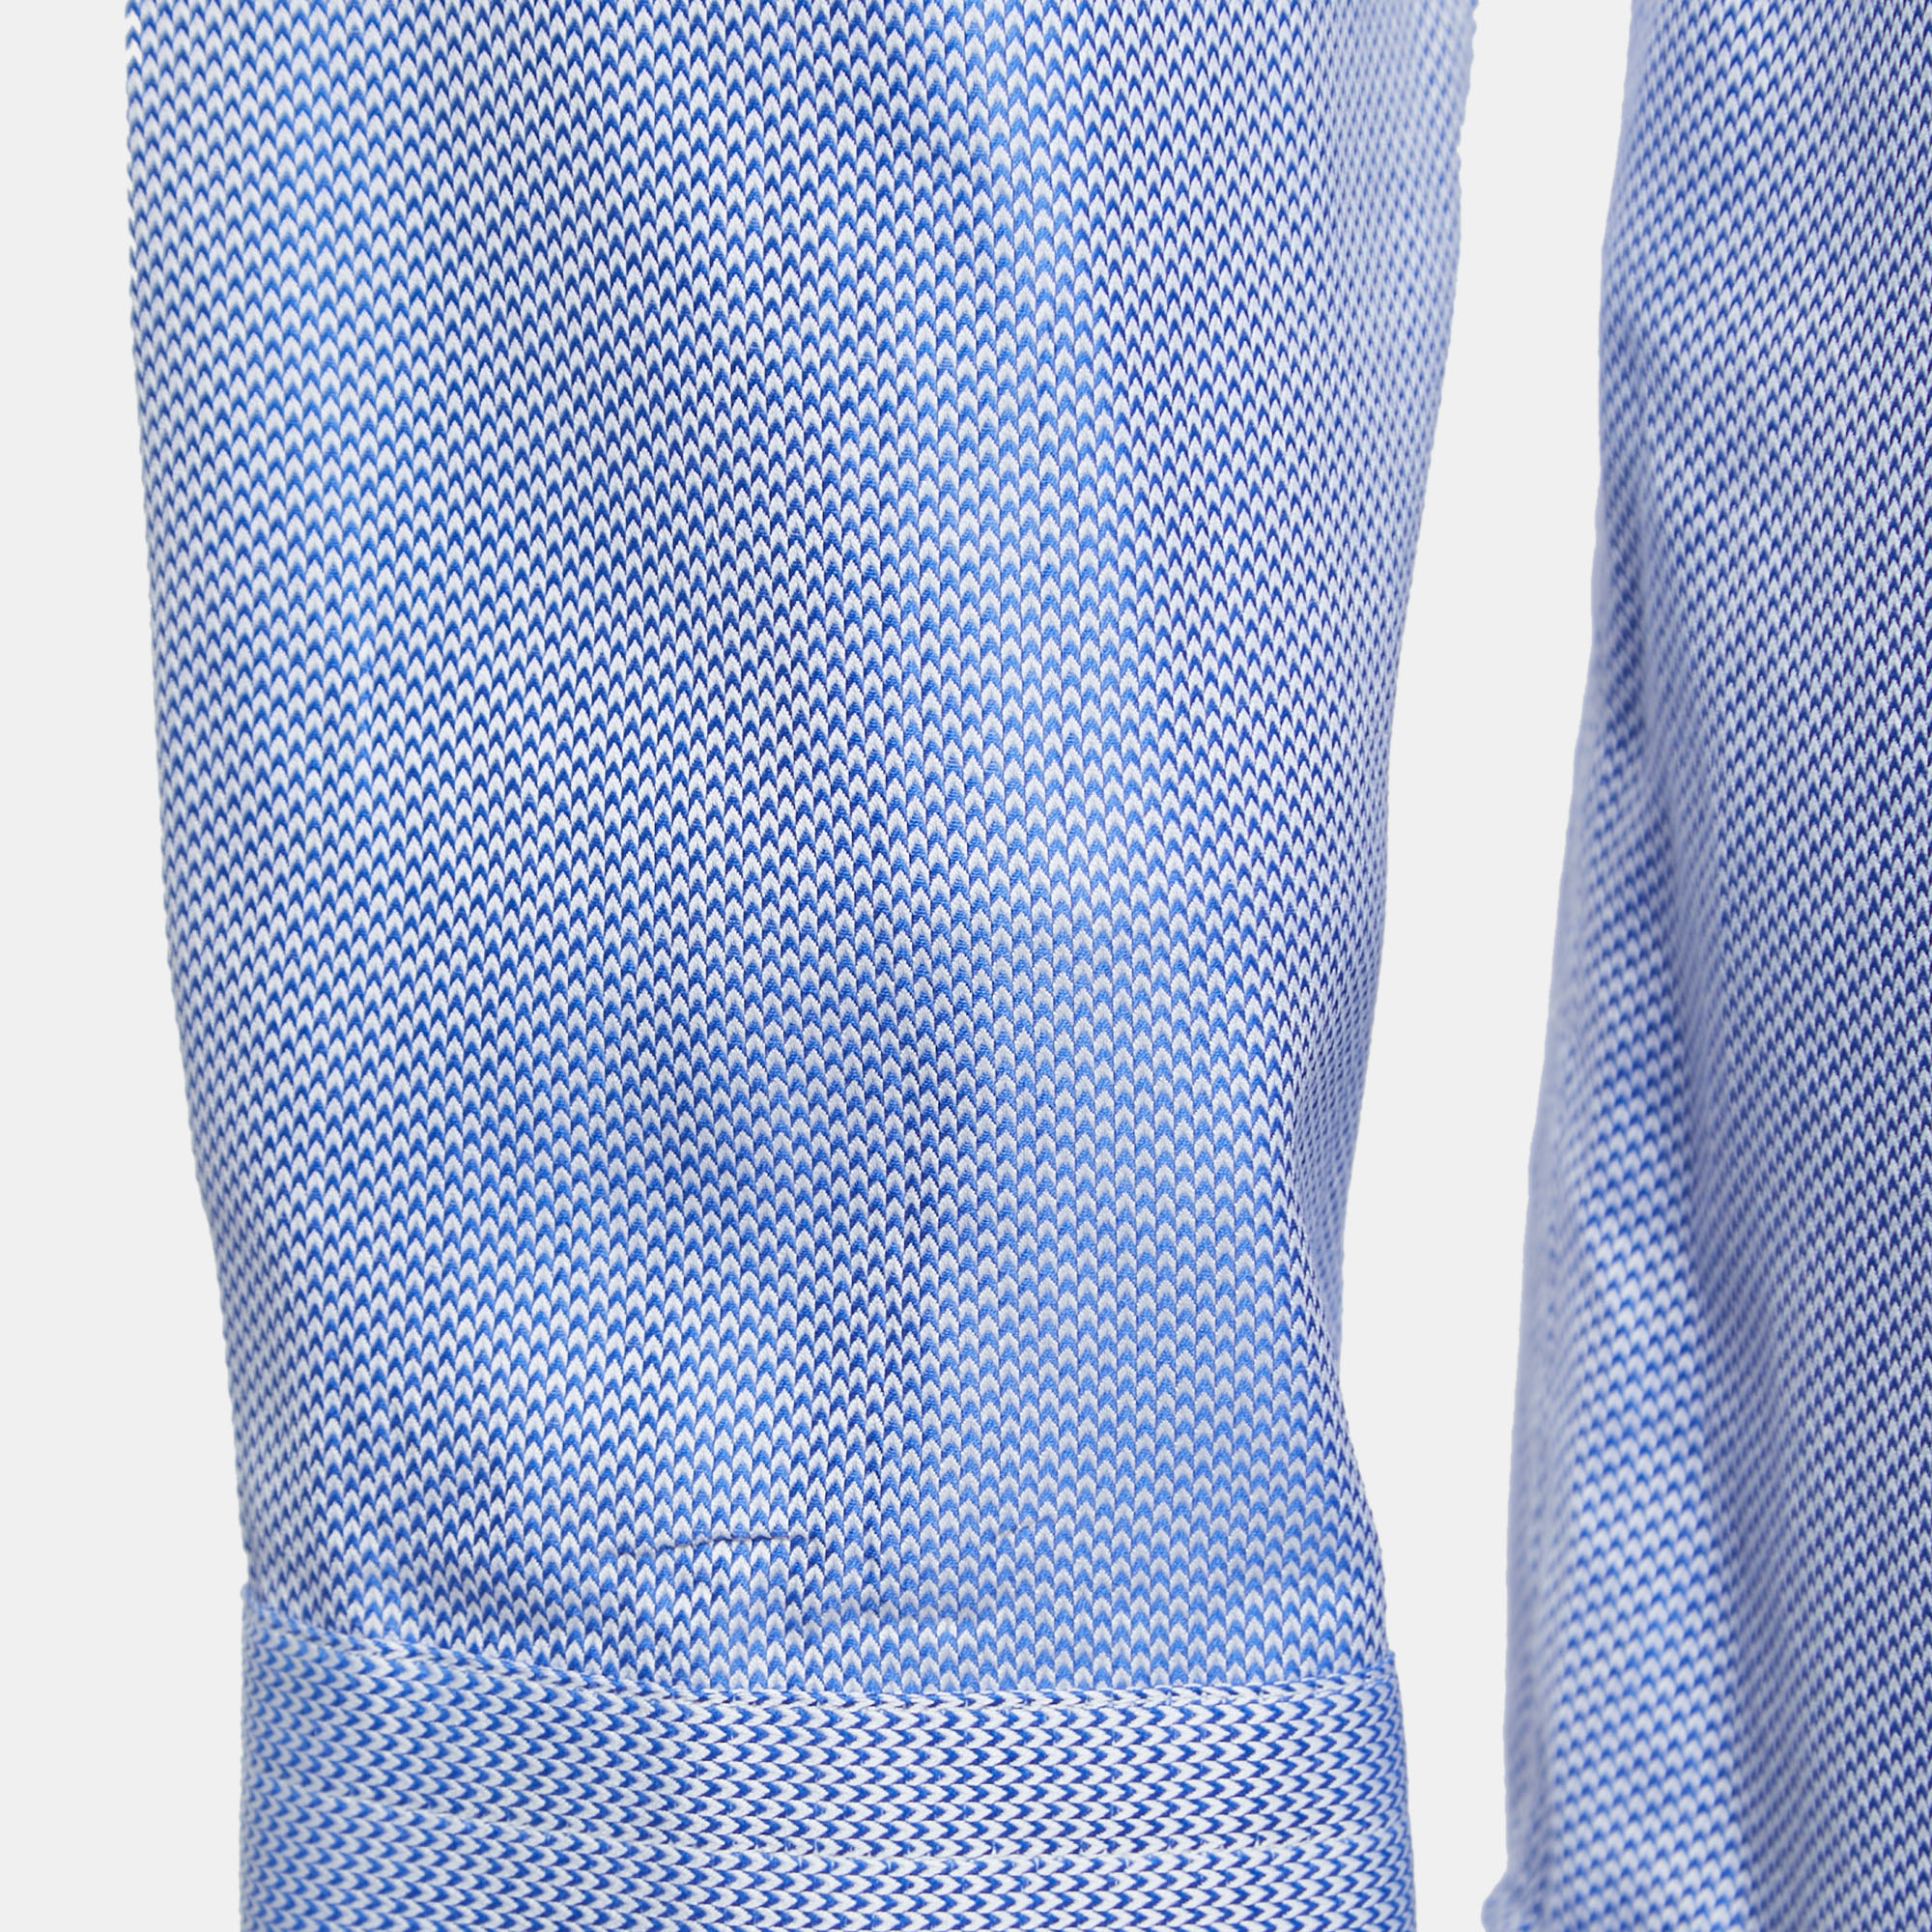 Boss By Hugo Boss Blue Patterned Cotton Slim Fit Full Sleeve Shirt XL